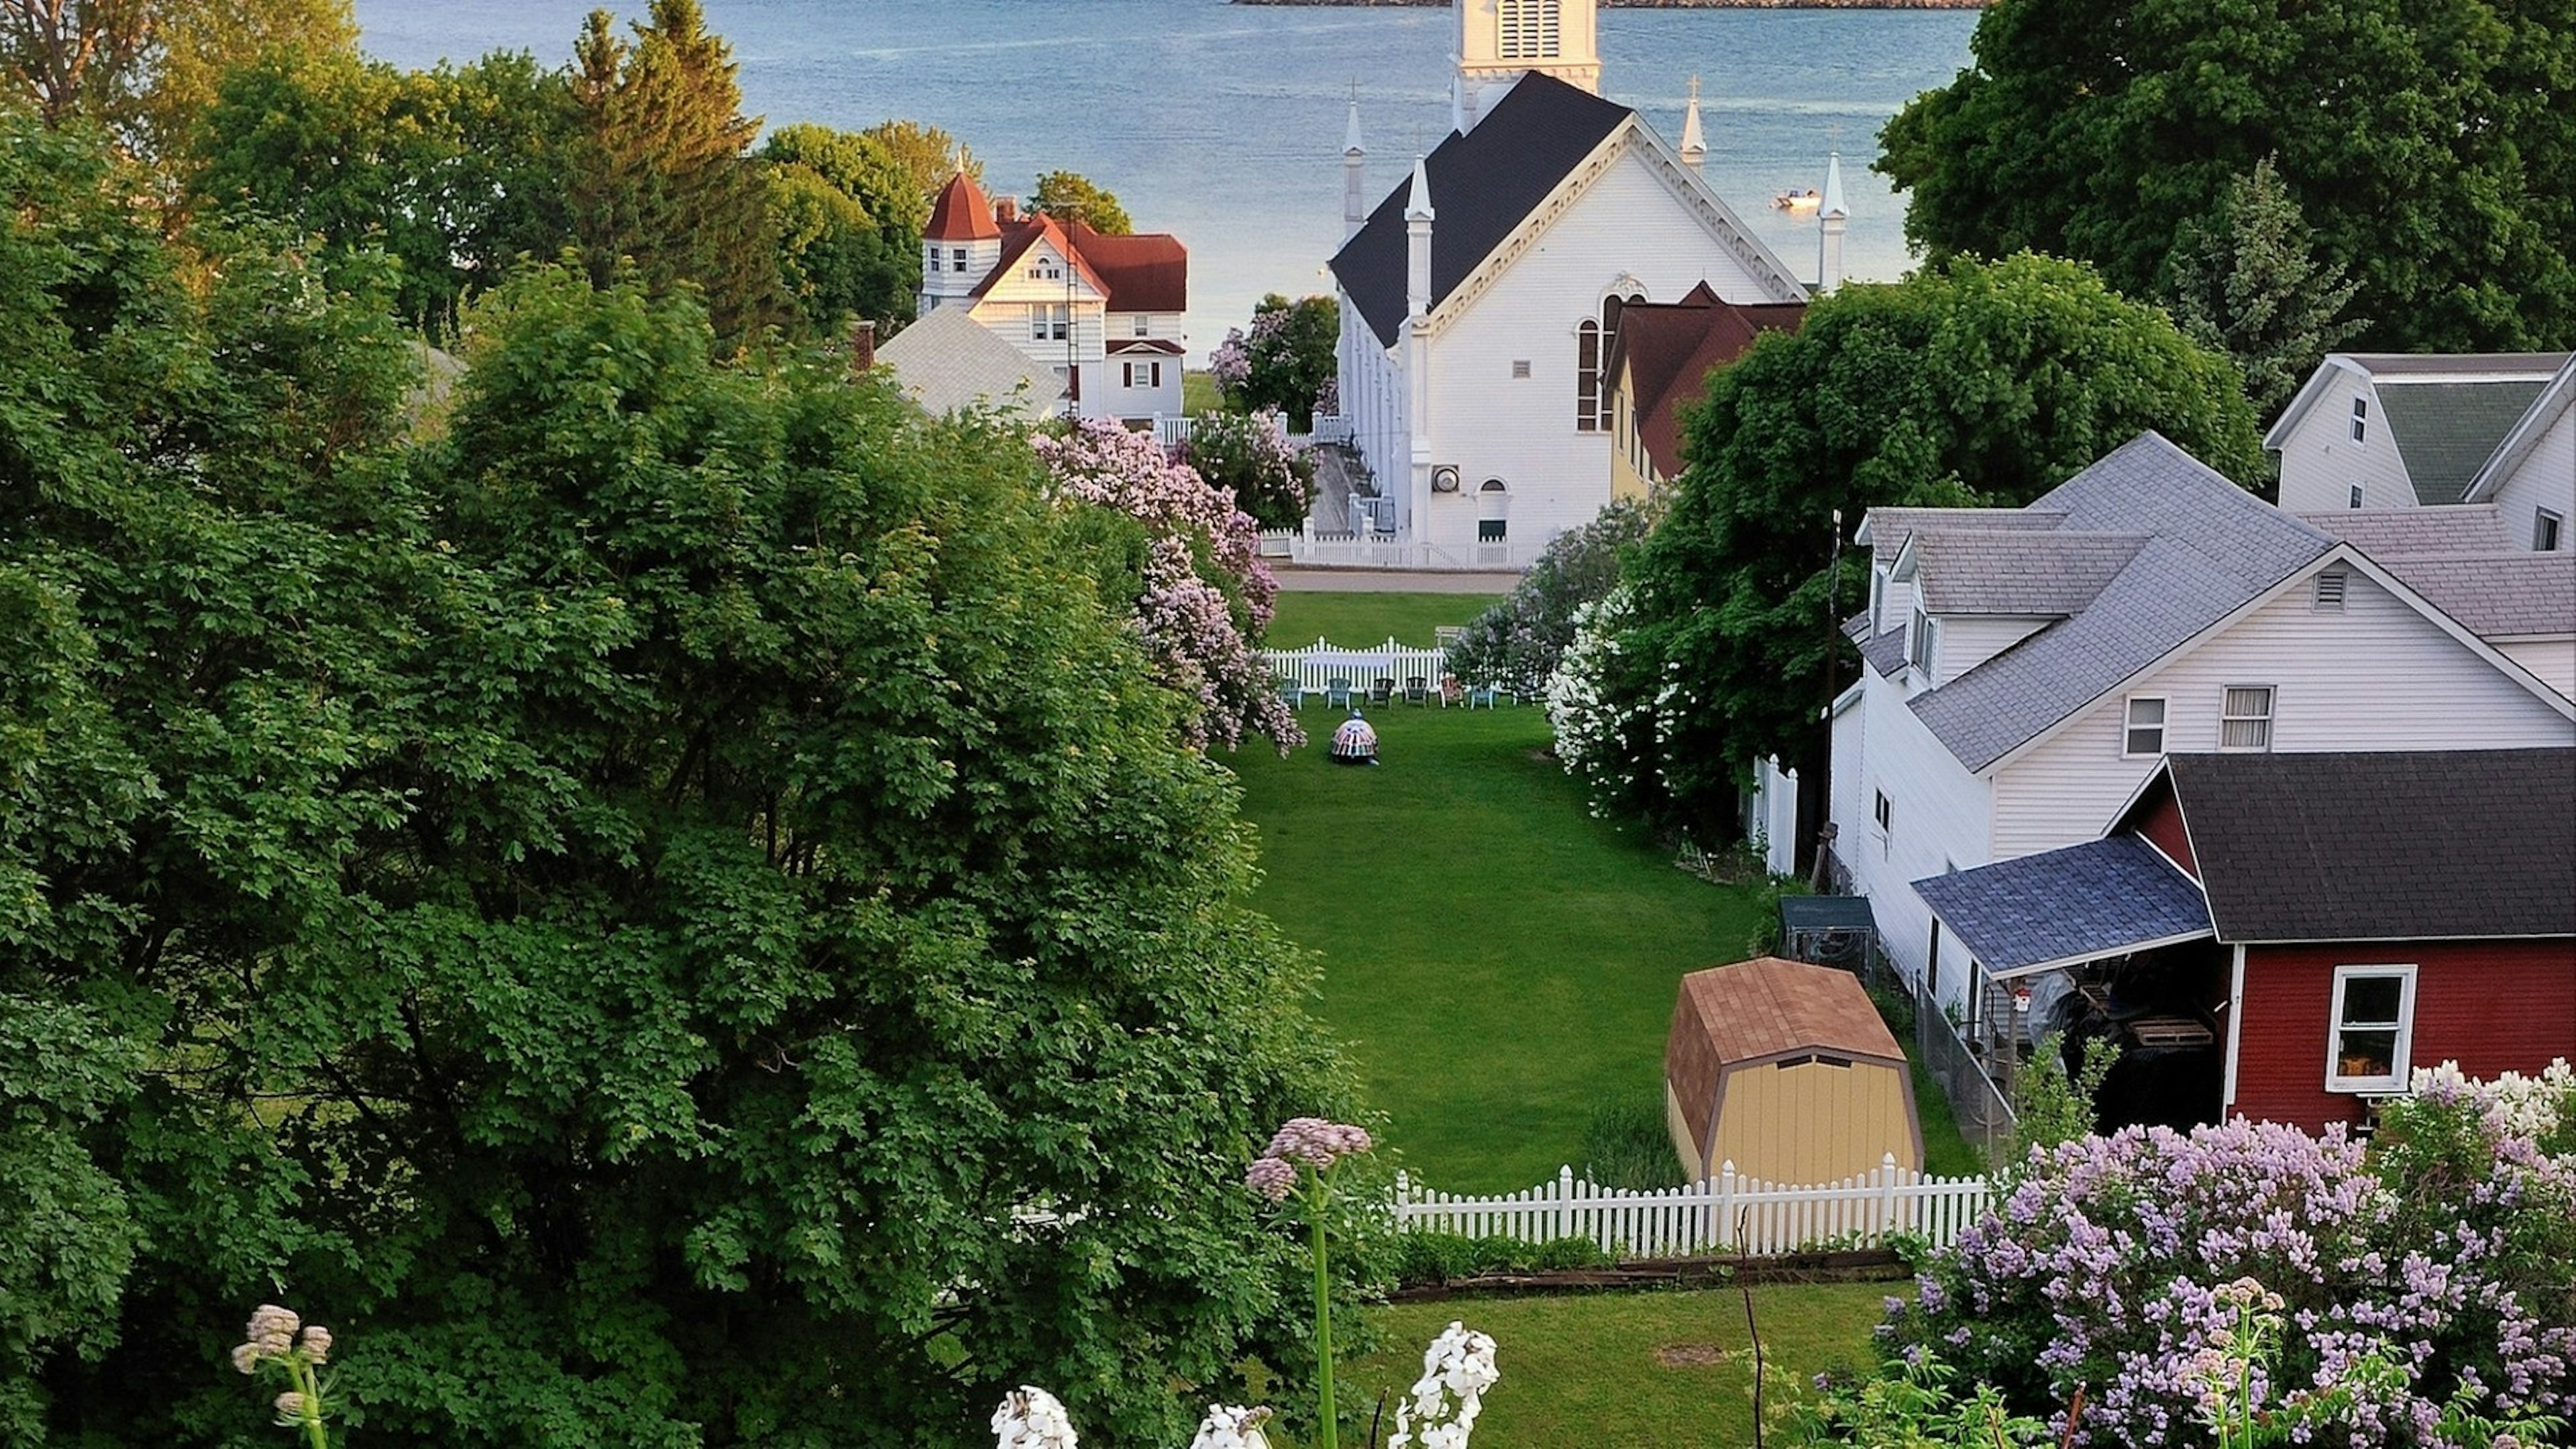 Mackinac Island Harbor, Saint Ann's Catholic Church. Taken during the annual Lilac Festival. Michigan USA